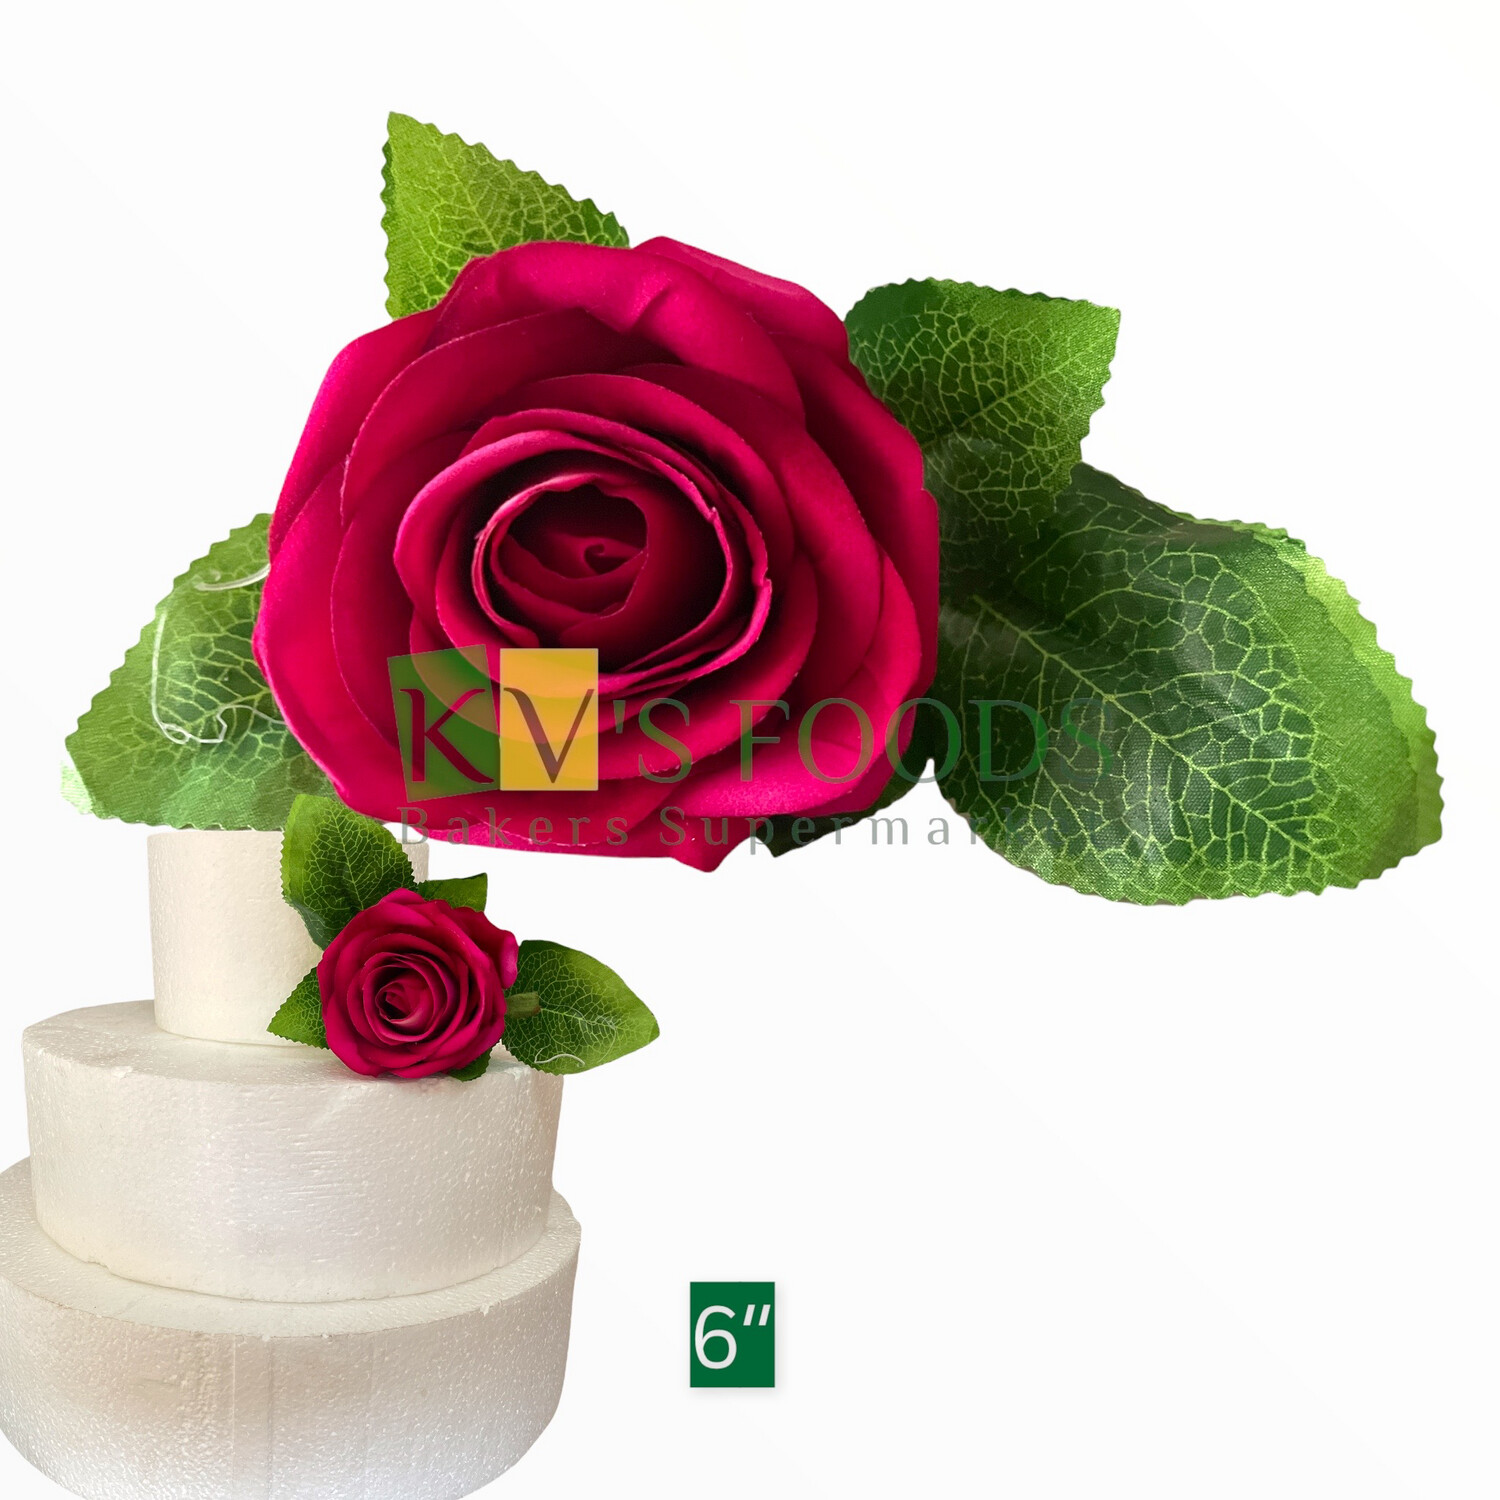 6” Non-edible Artificial Rose Flower For Cake Decoration | Wedding Cake Flower - KV’s FOODS